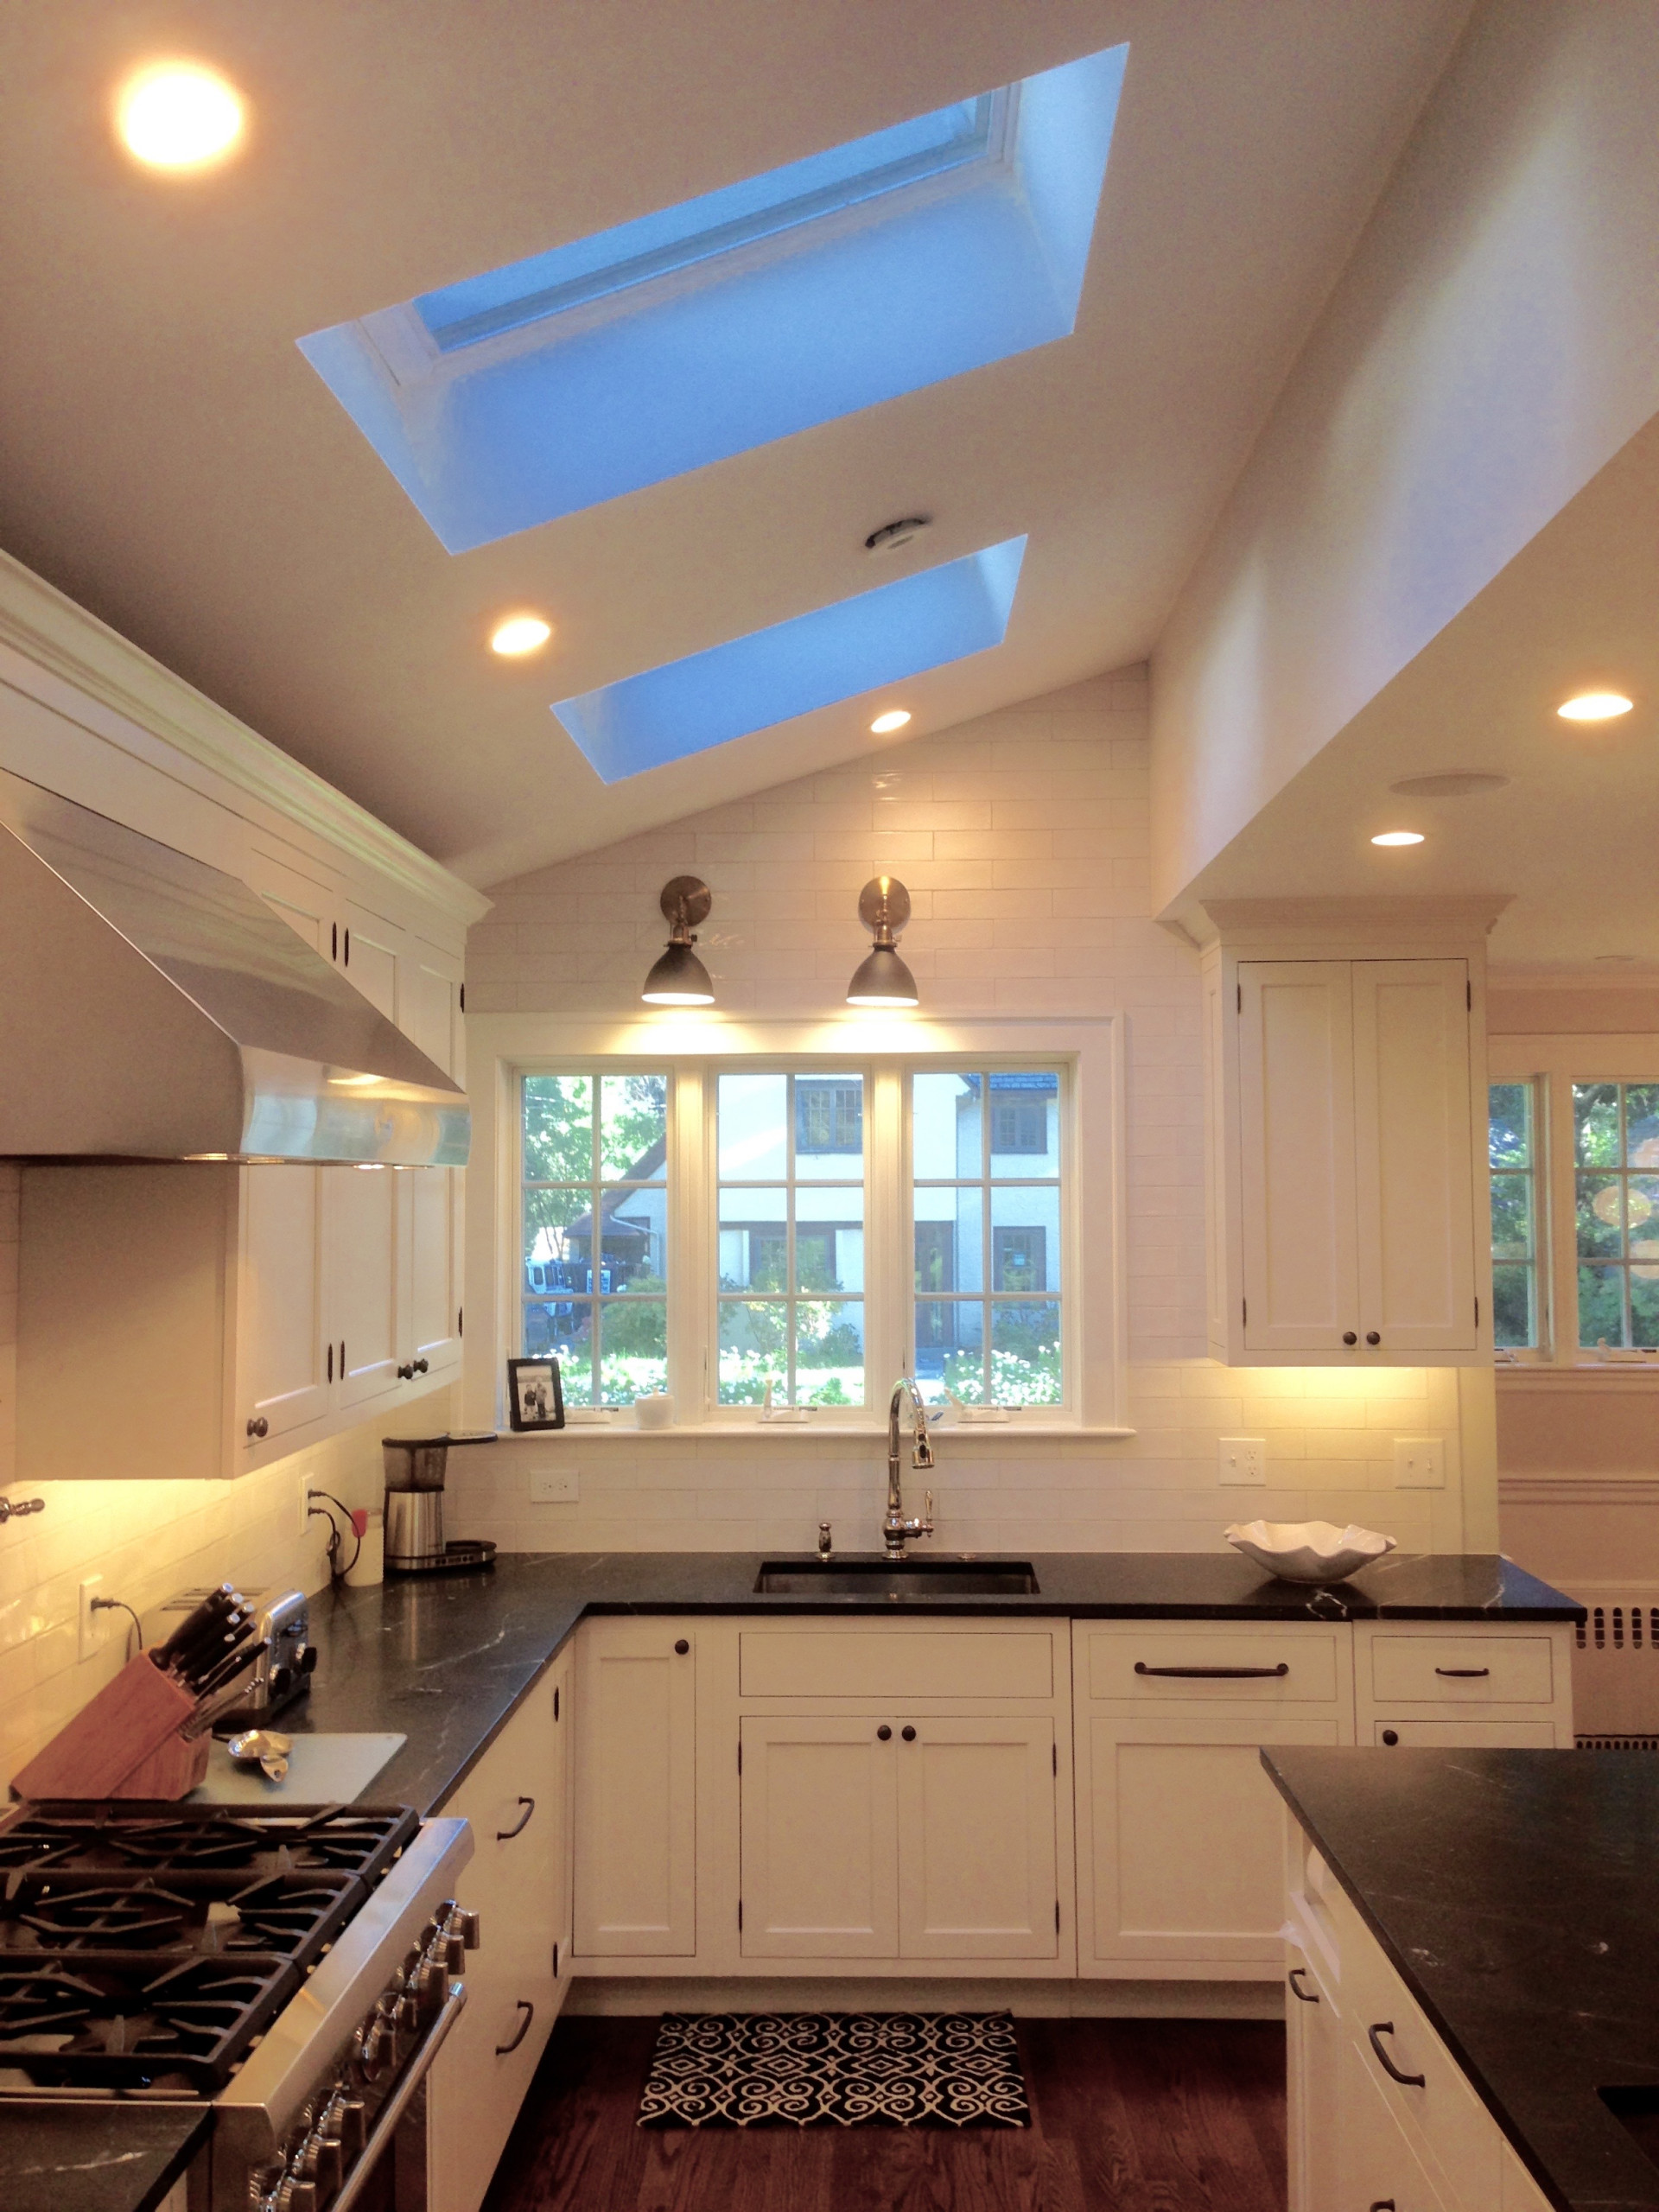 Skylights in Kitchen Addition